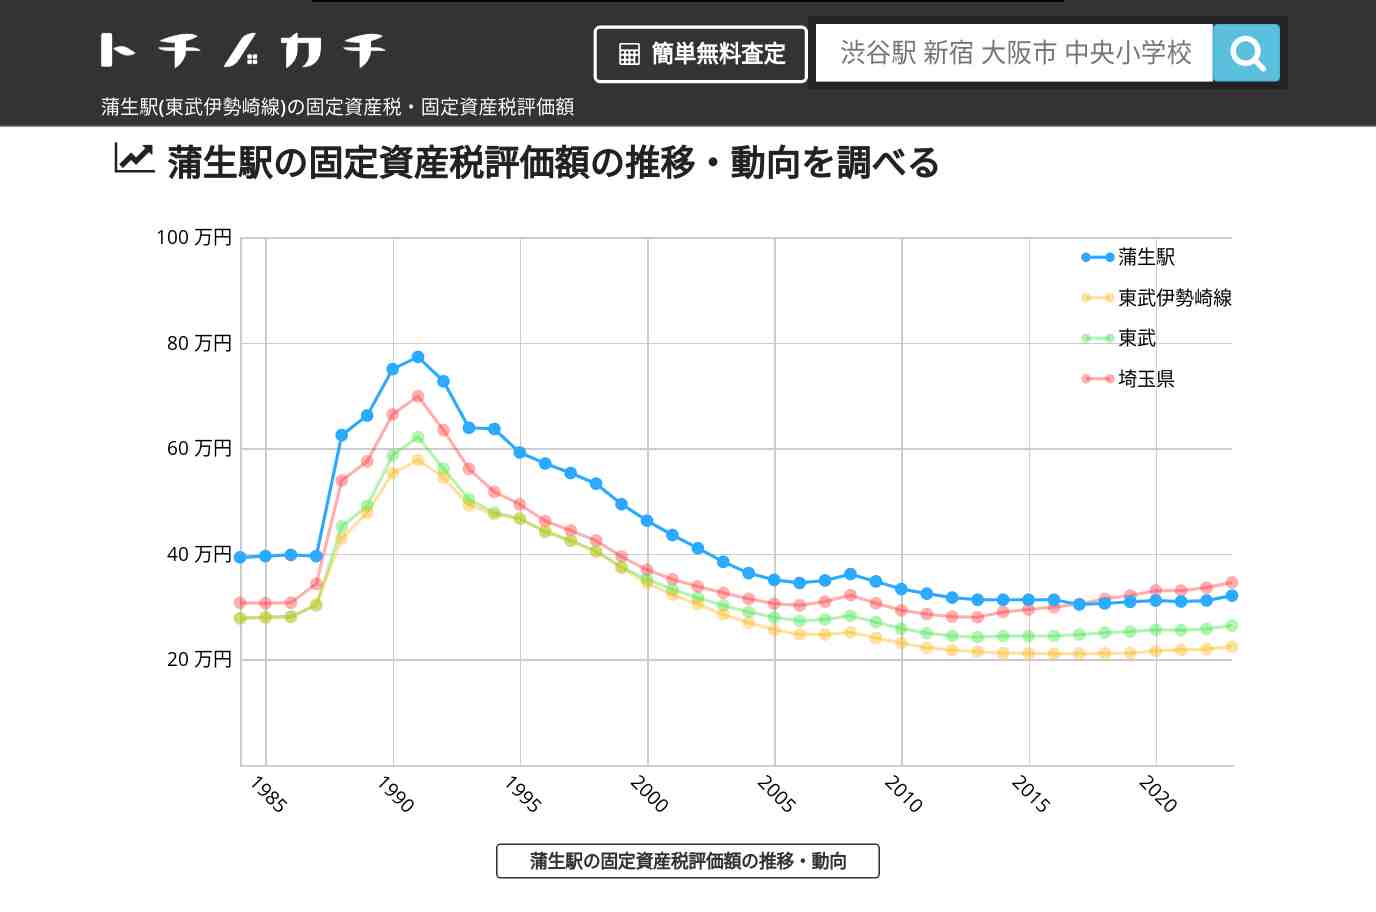 蒲生駅(東武伊勢崎線)の固定資産税・固定資産税評価額 | トチノカチ